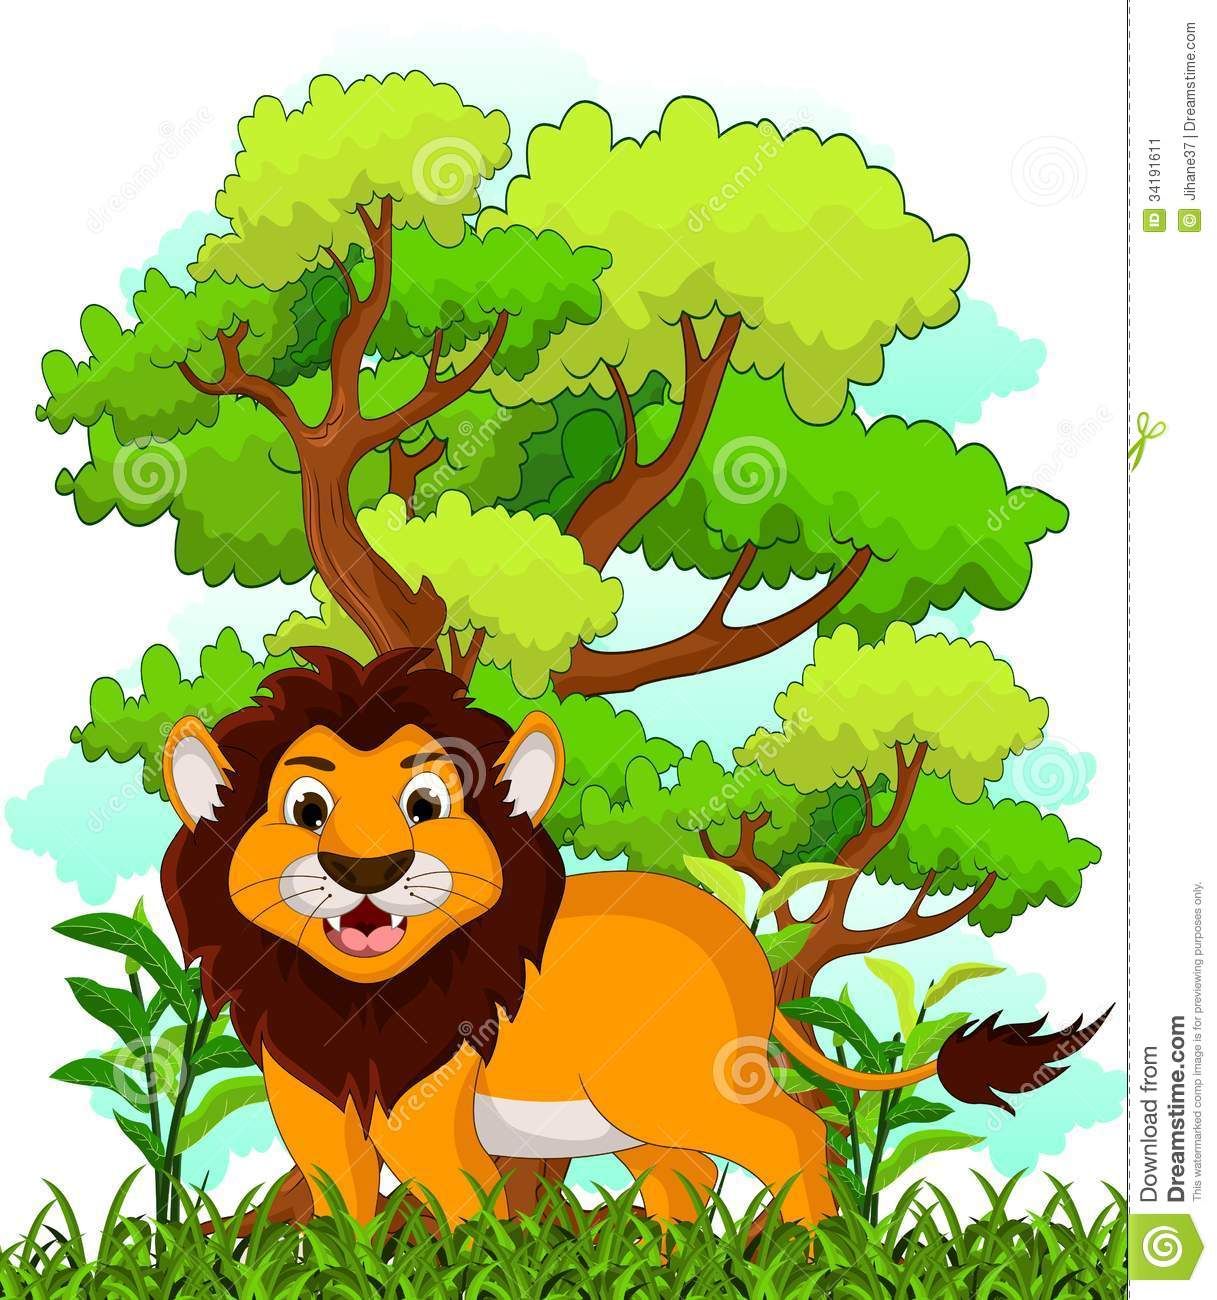 lions clipart forest